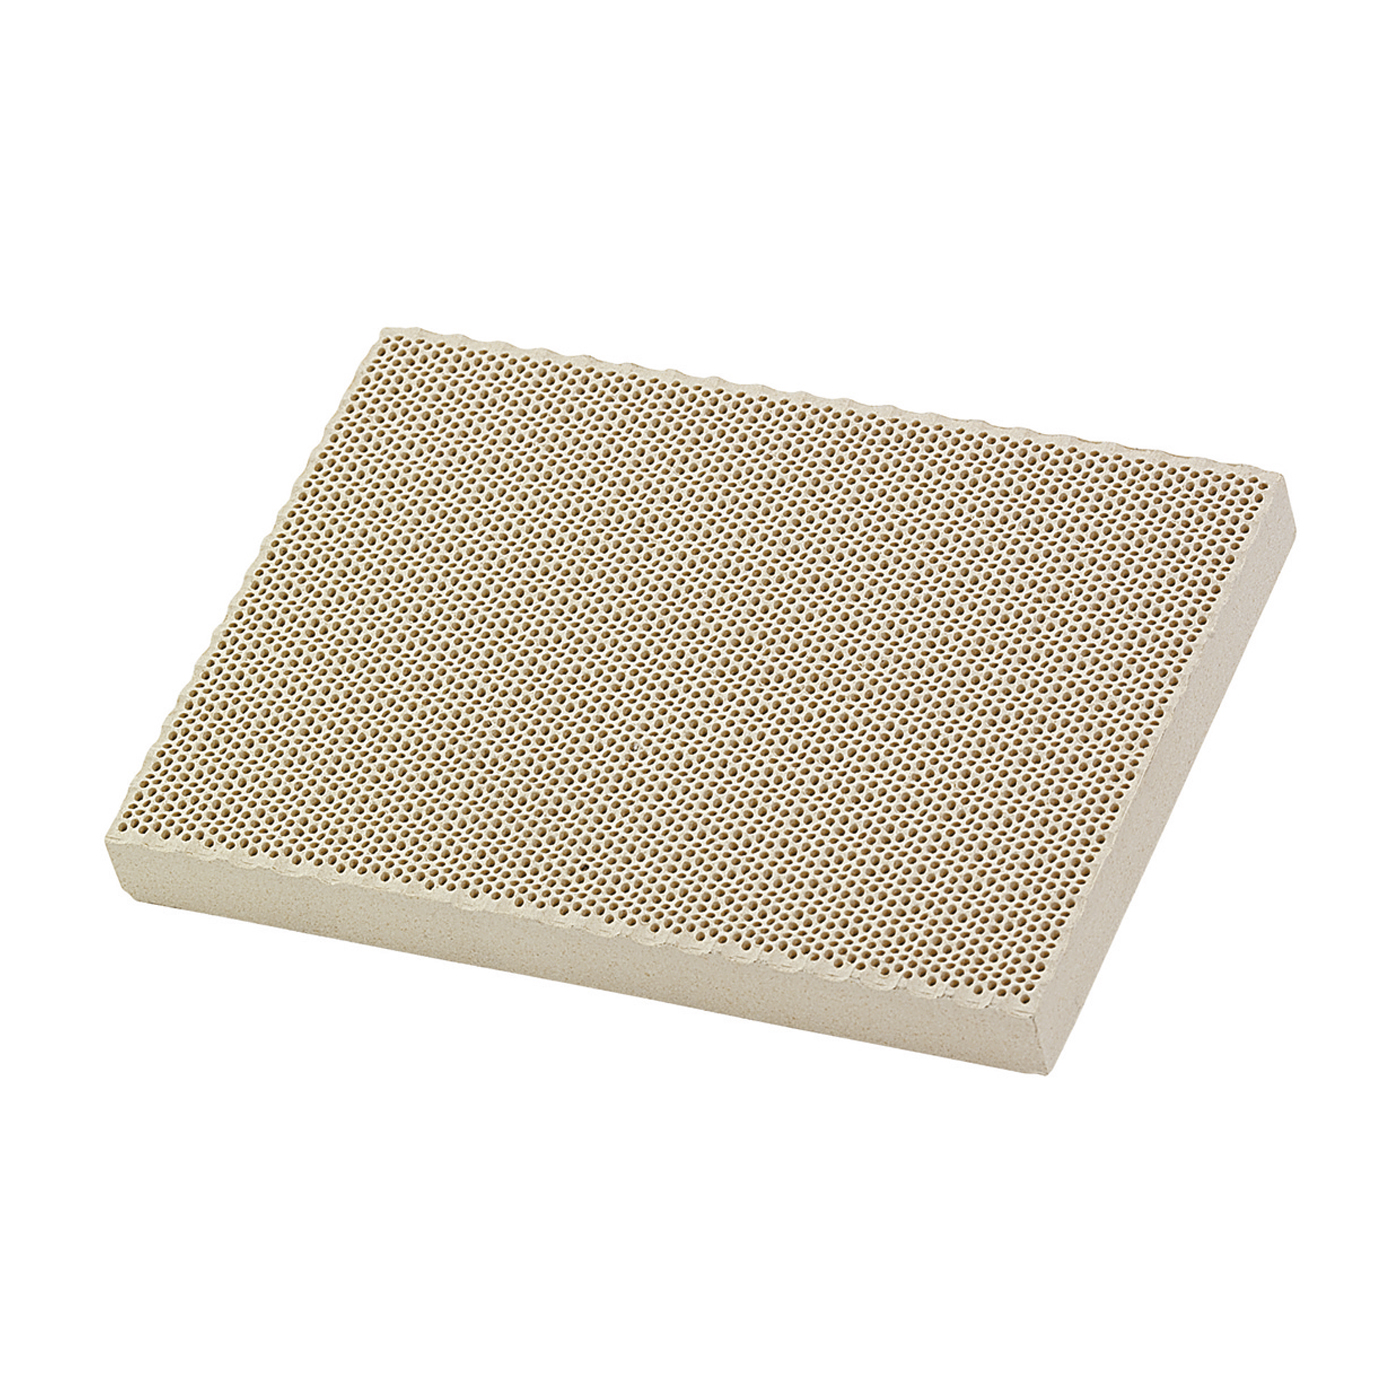 Honeycomb Soldering Plate, 135 x 97 x 13 mm - 1 piece